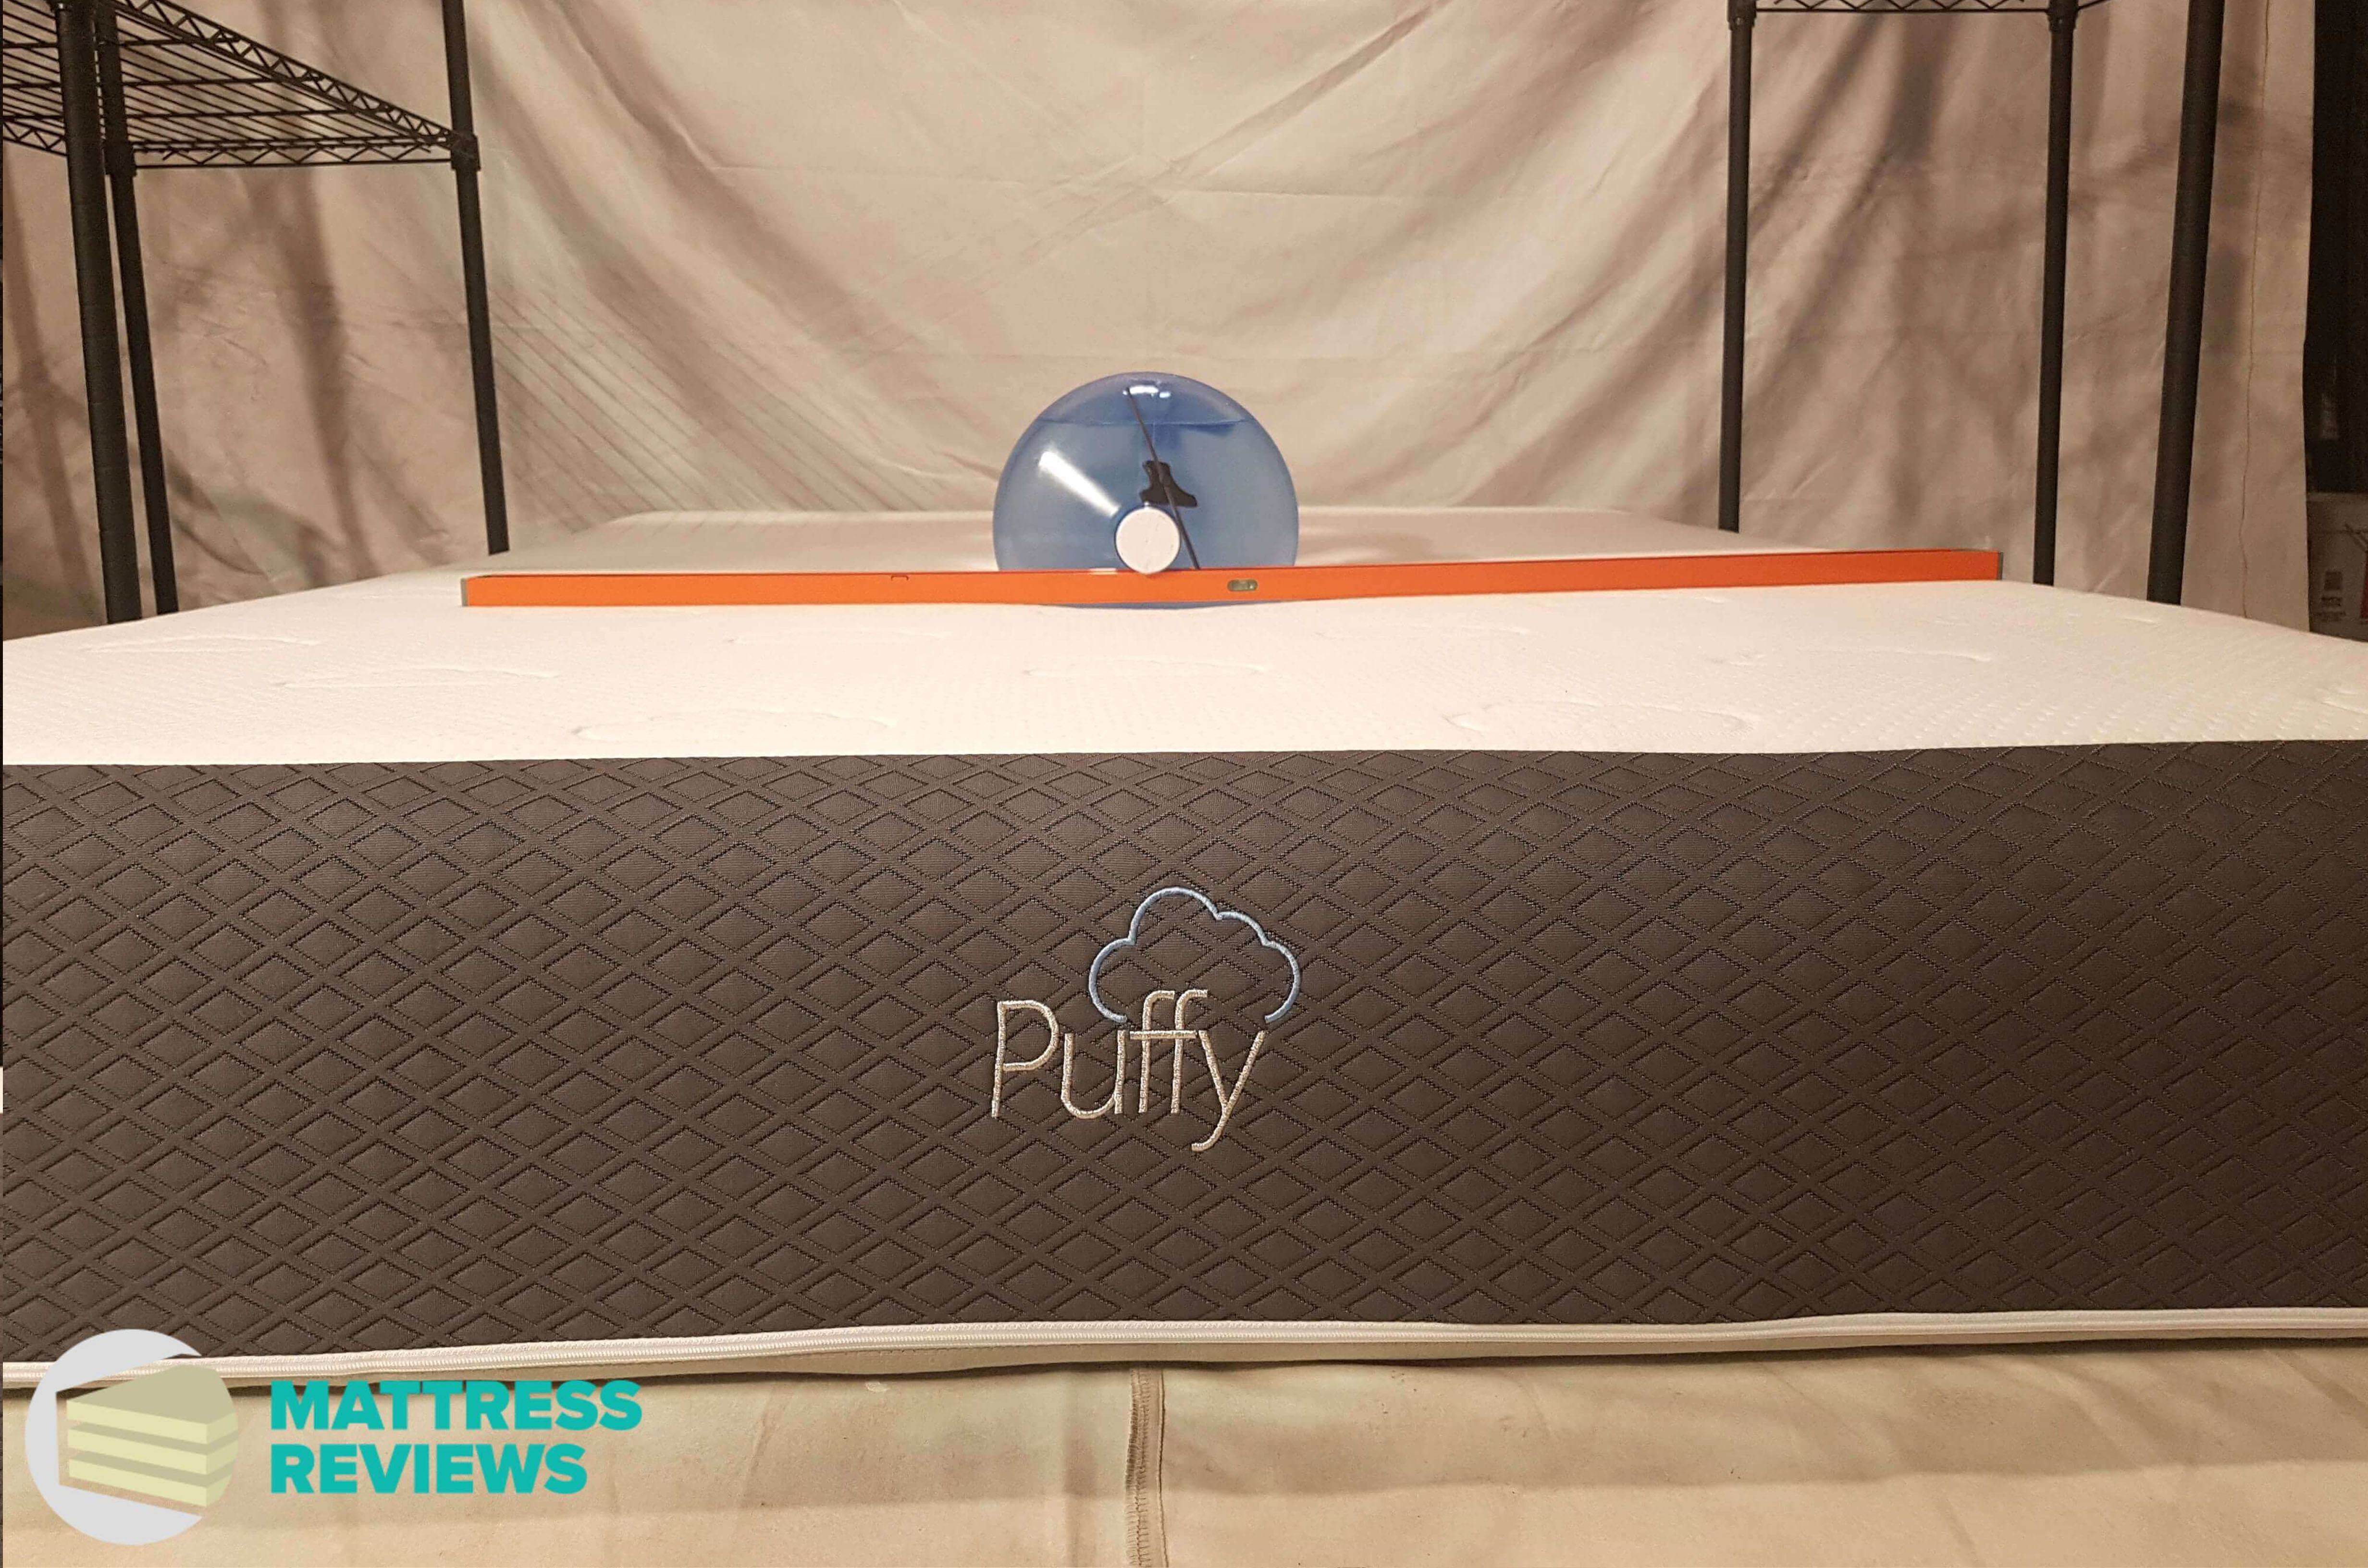 Image of the Puffy mattress firmness test.